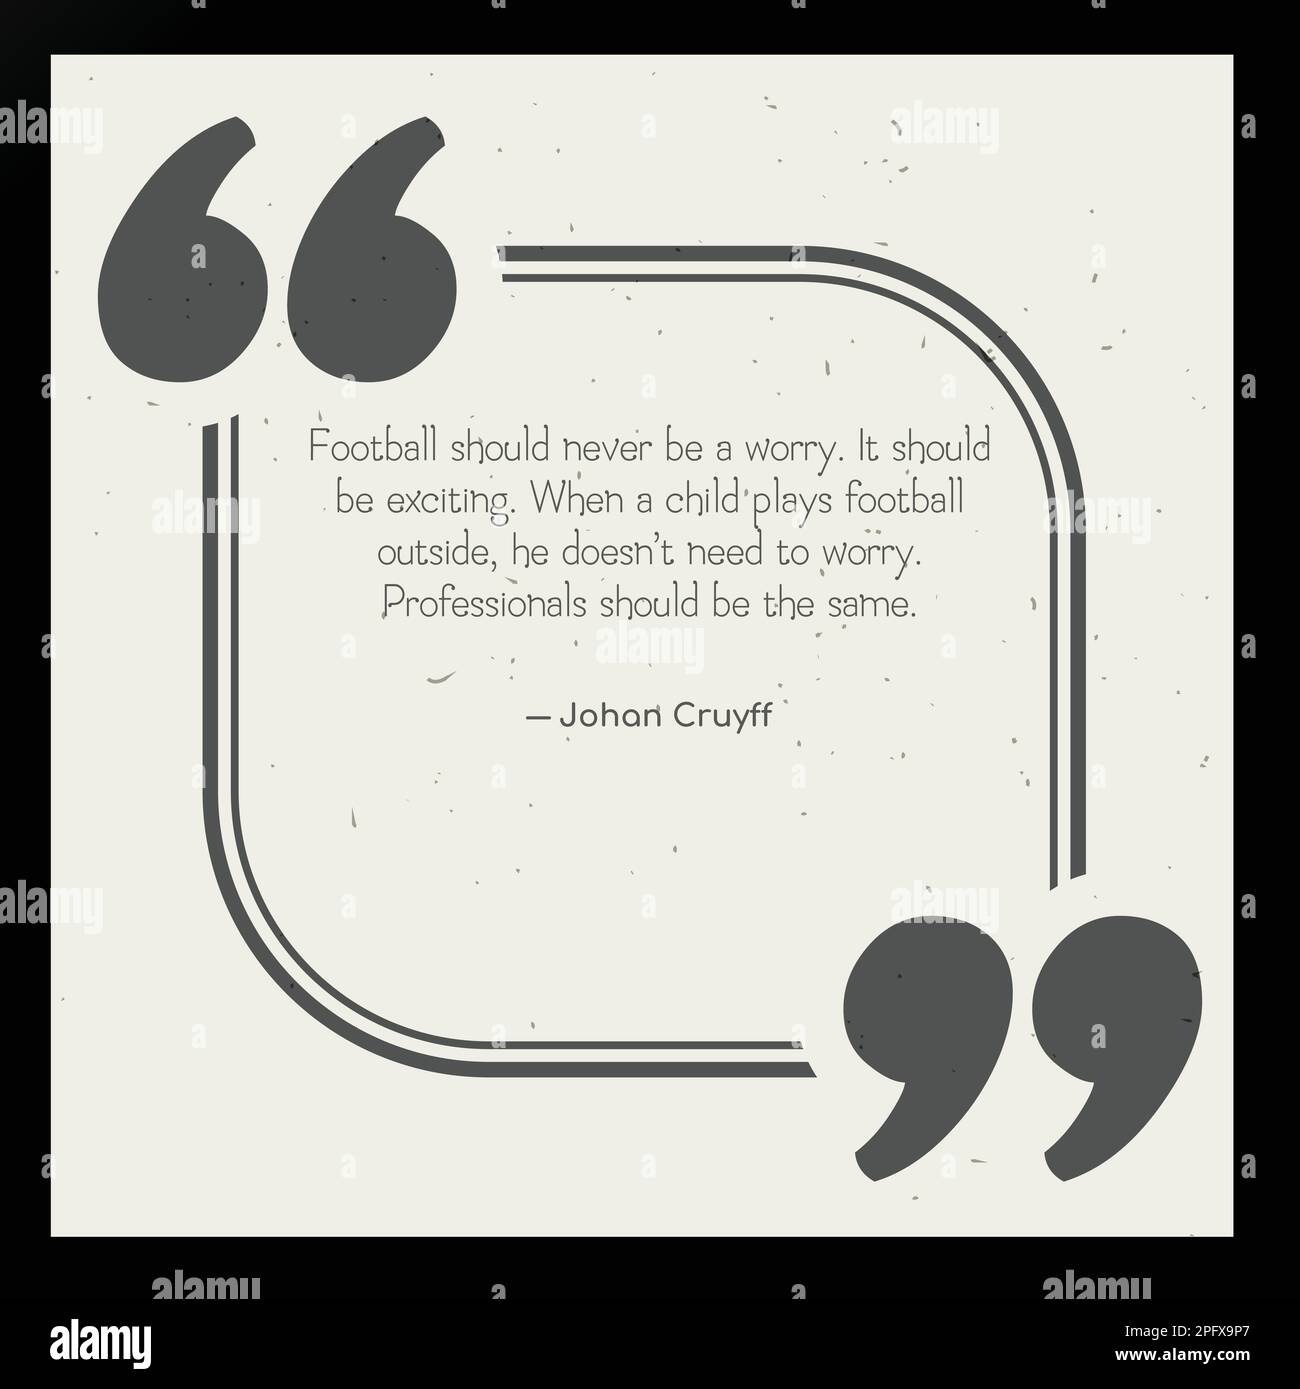 Johan Cruyff Quotes for Inspiration and Motivation - Johan Cruyff ...